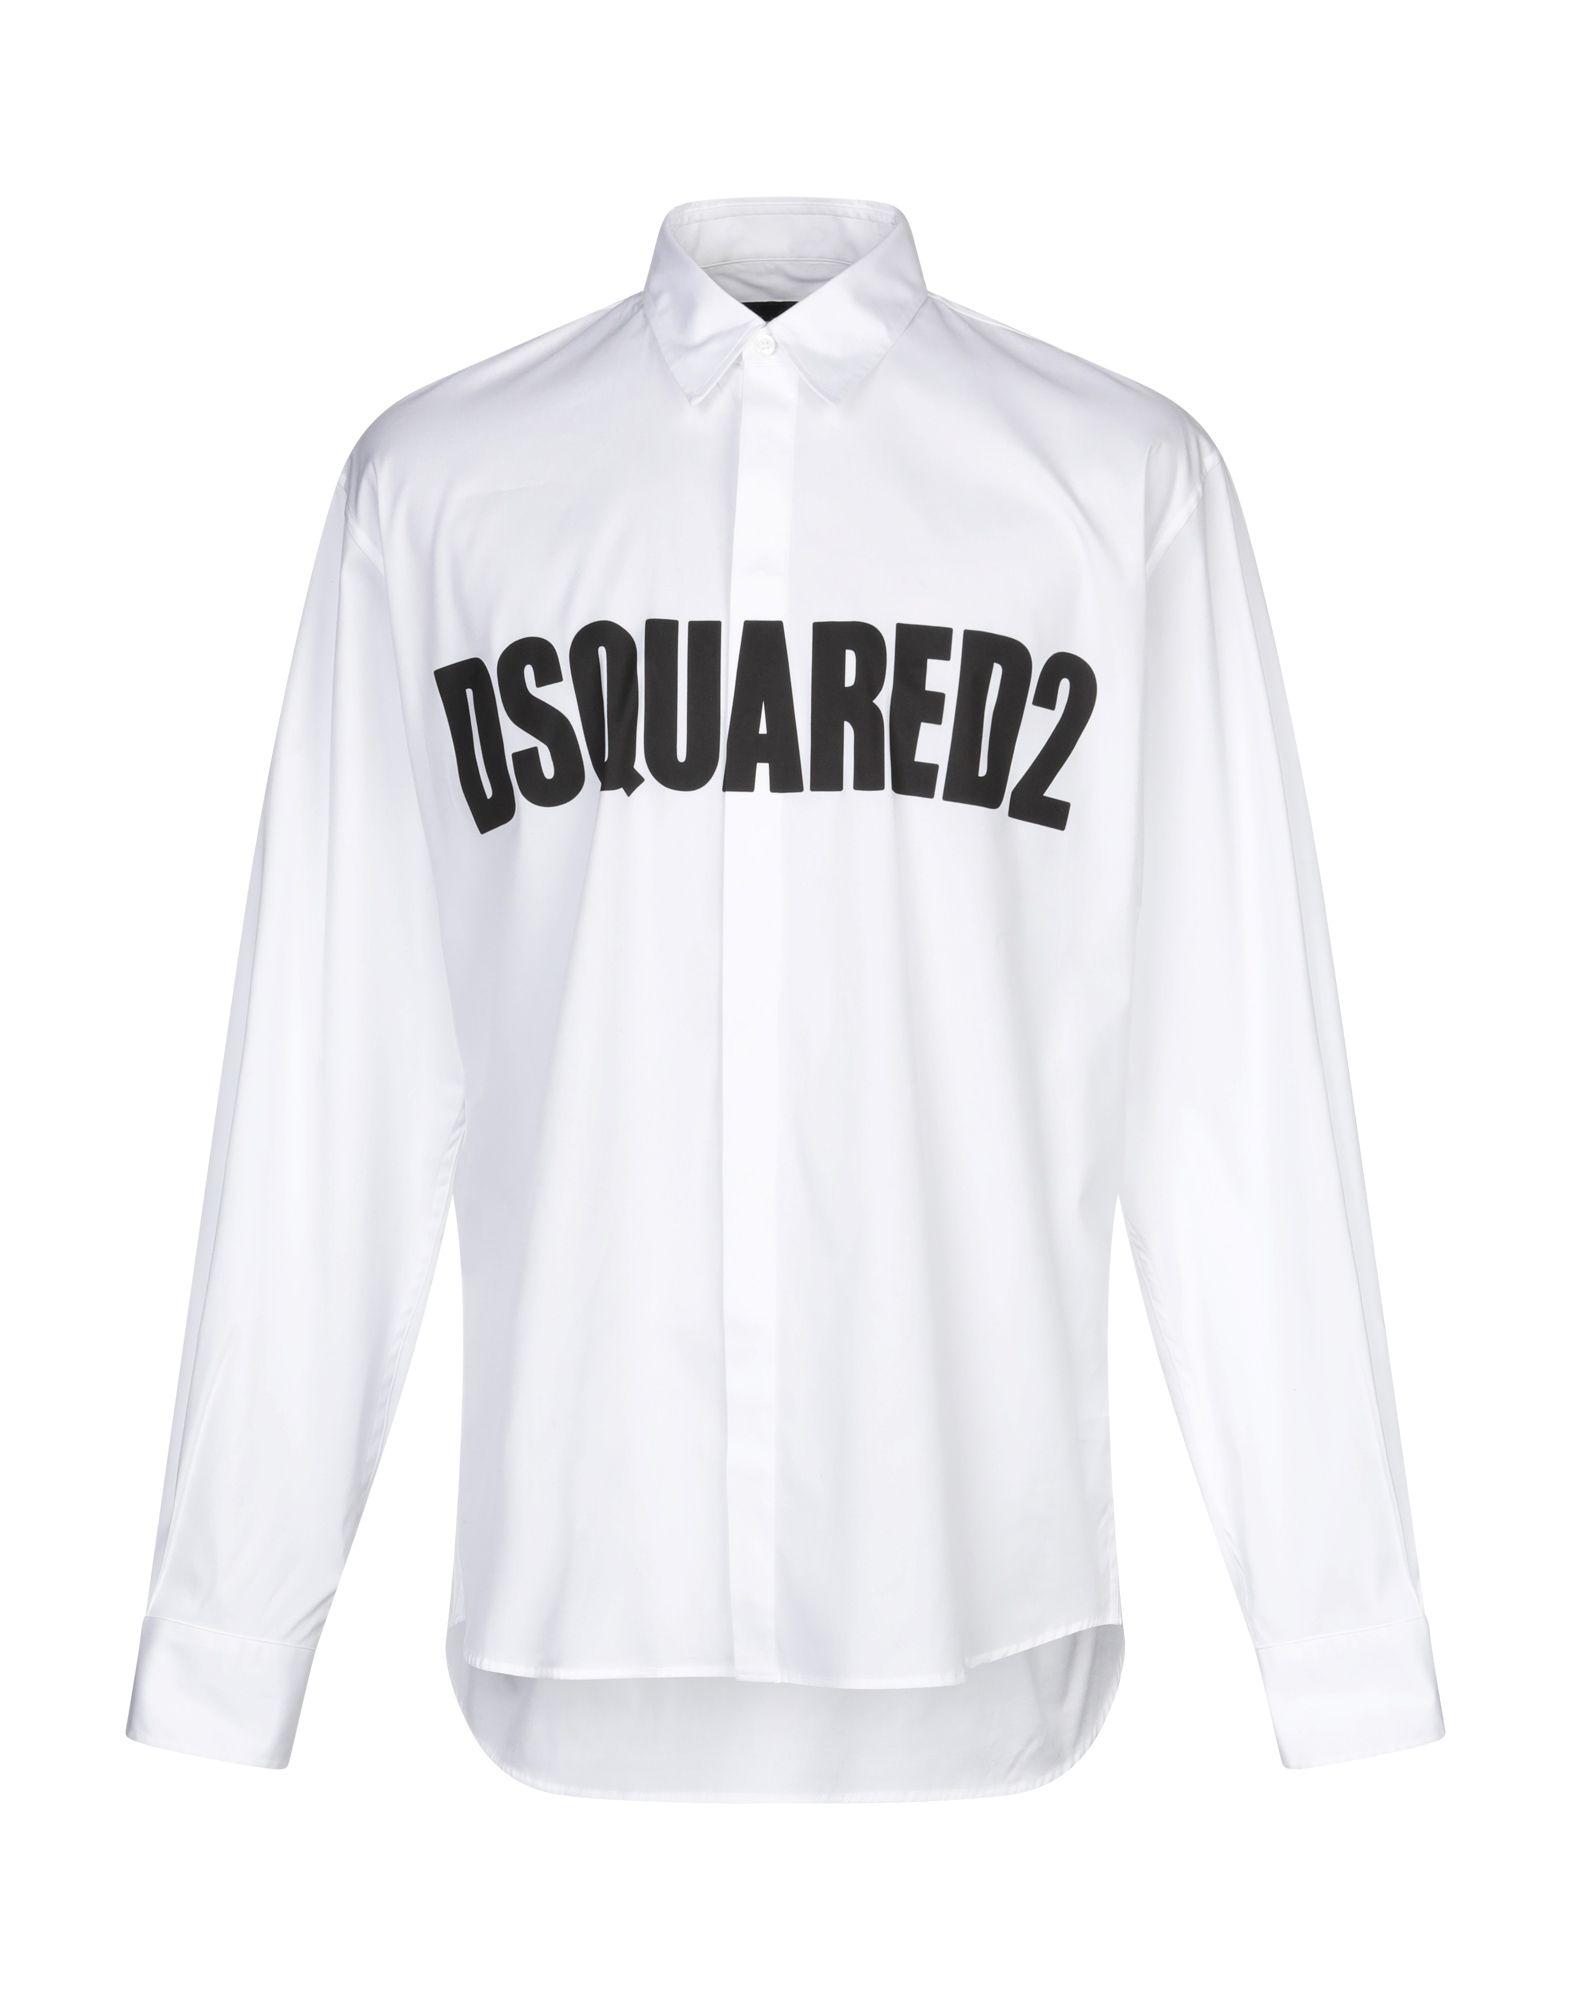 DSquared² Shirt in White for Men - Lyst